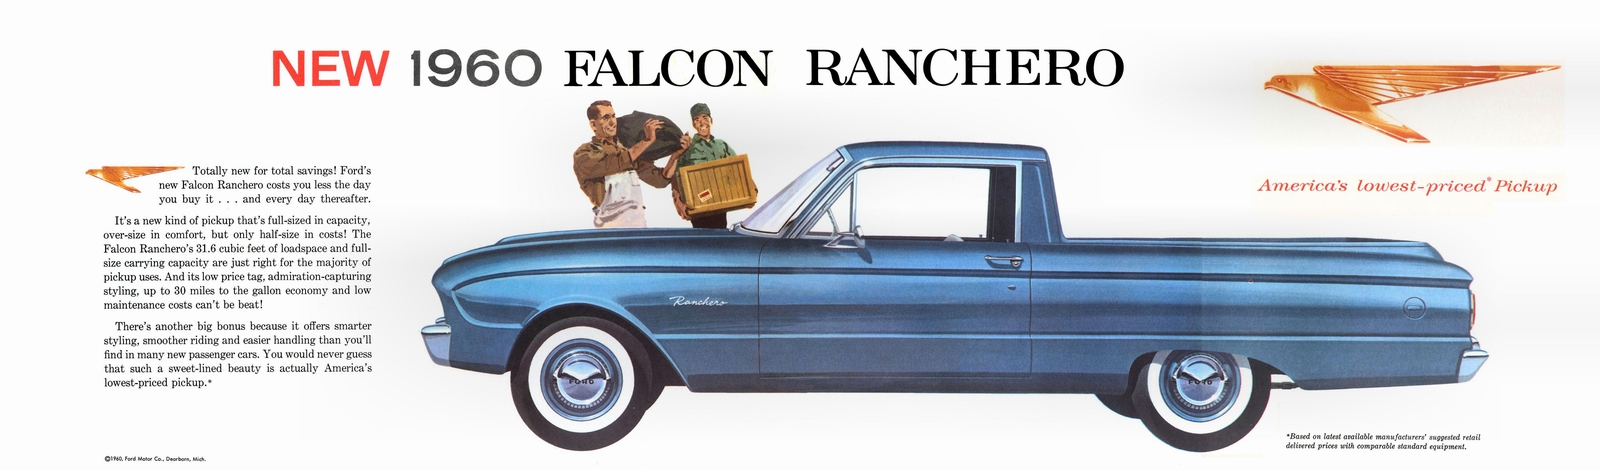 n_1960 Ford Falcon Ranchero-02-03.jpg